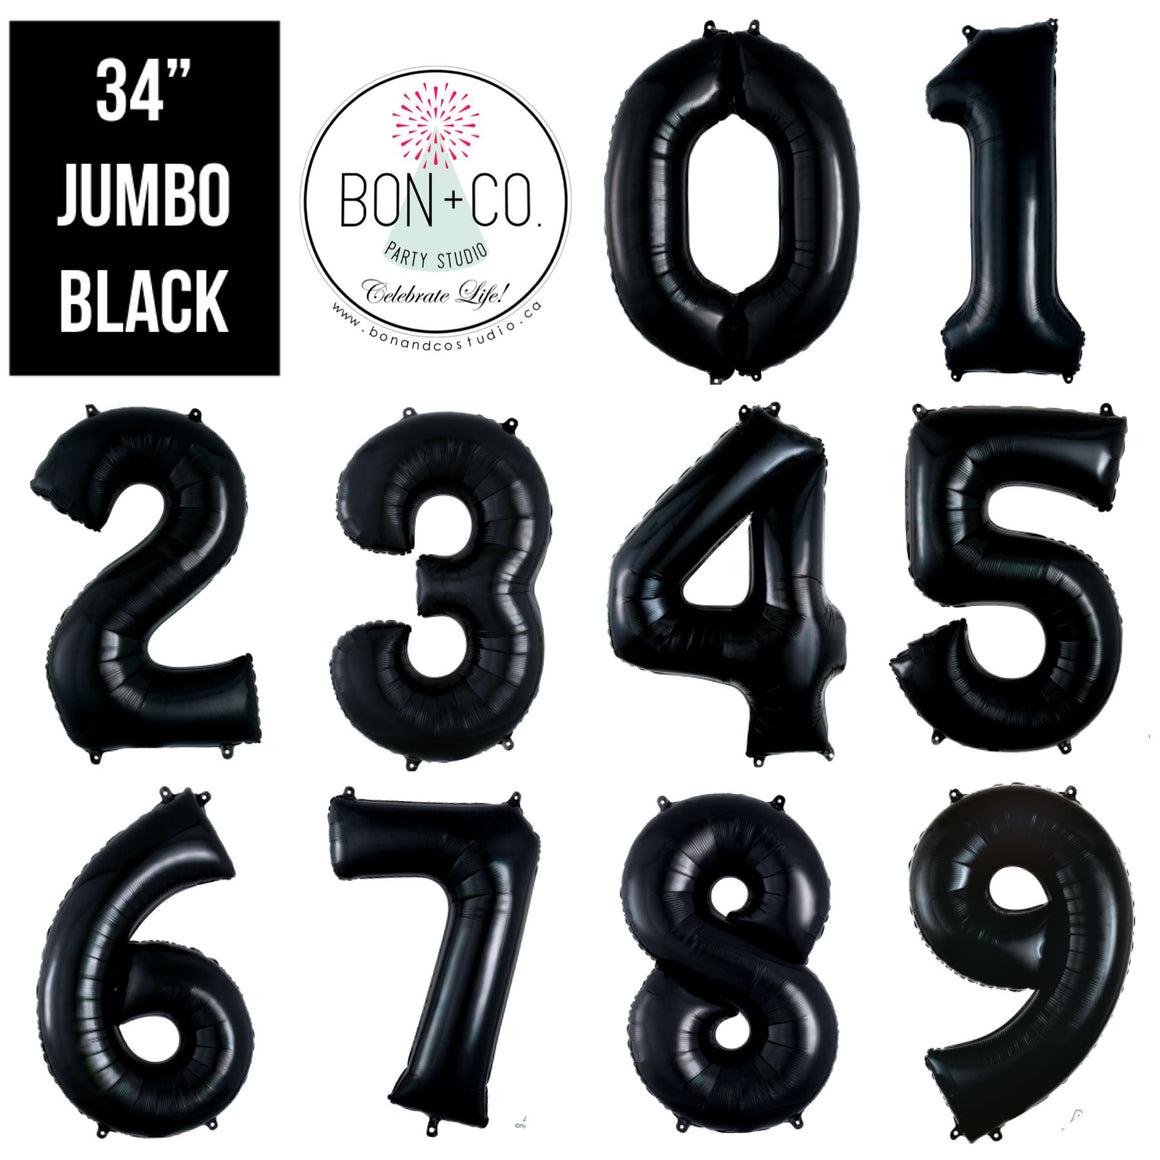 BALLOON BAR - 34" JUMBO NUMBER BLACK